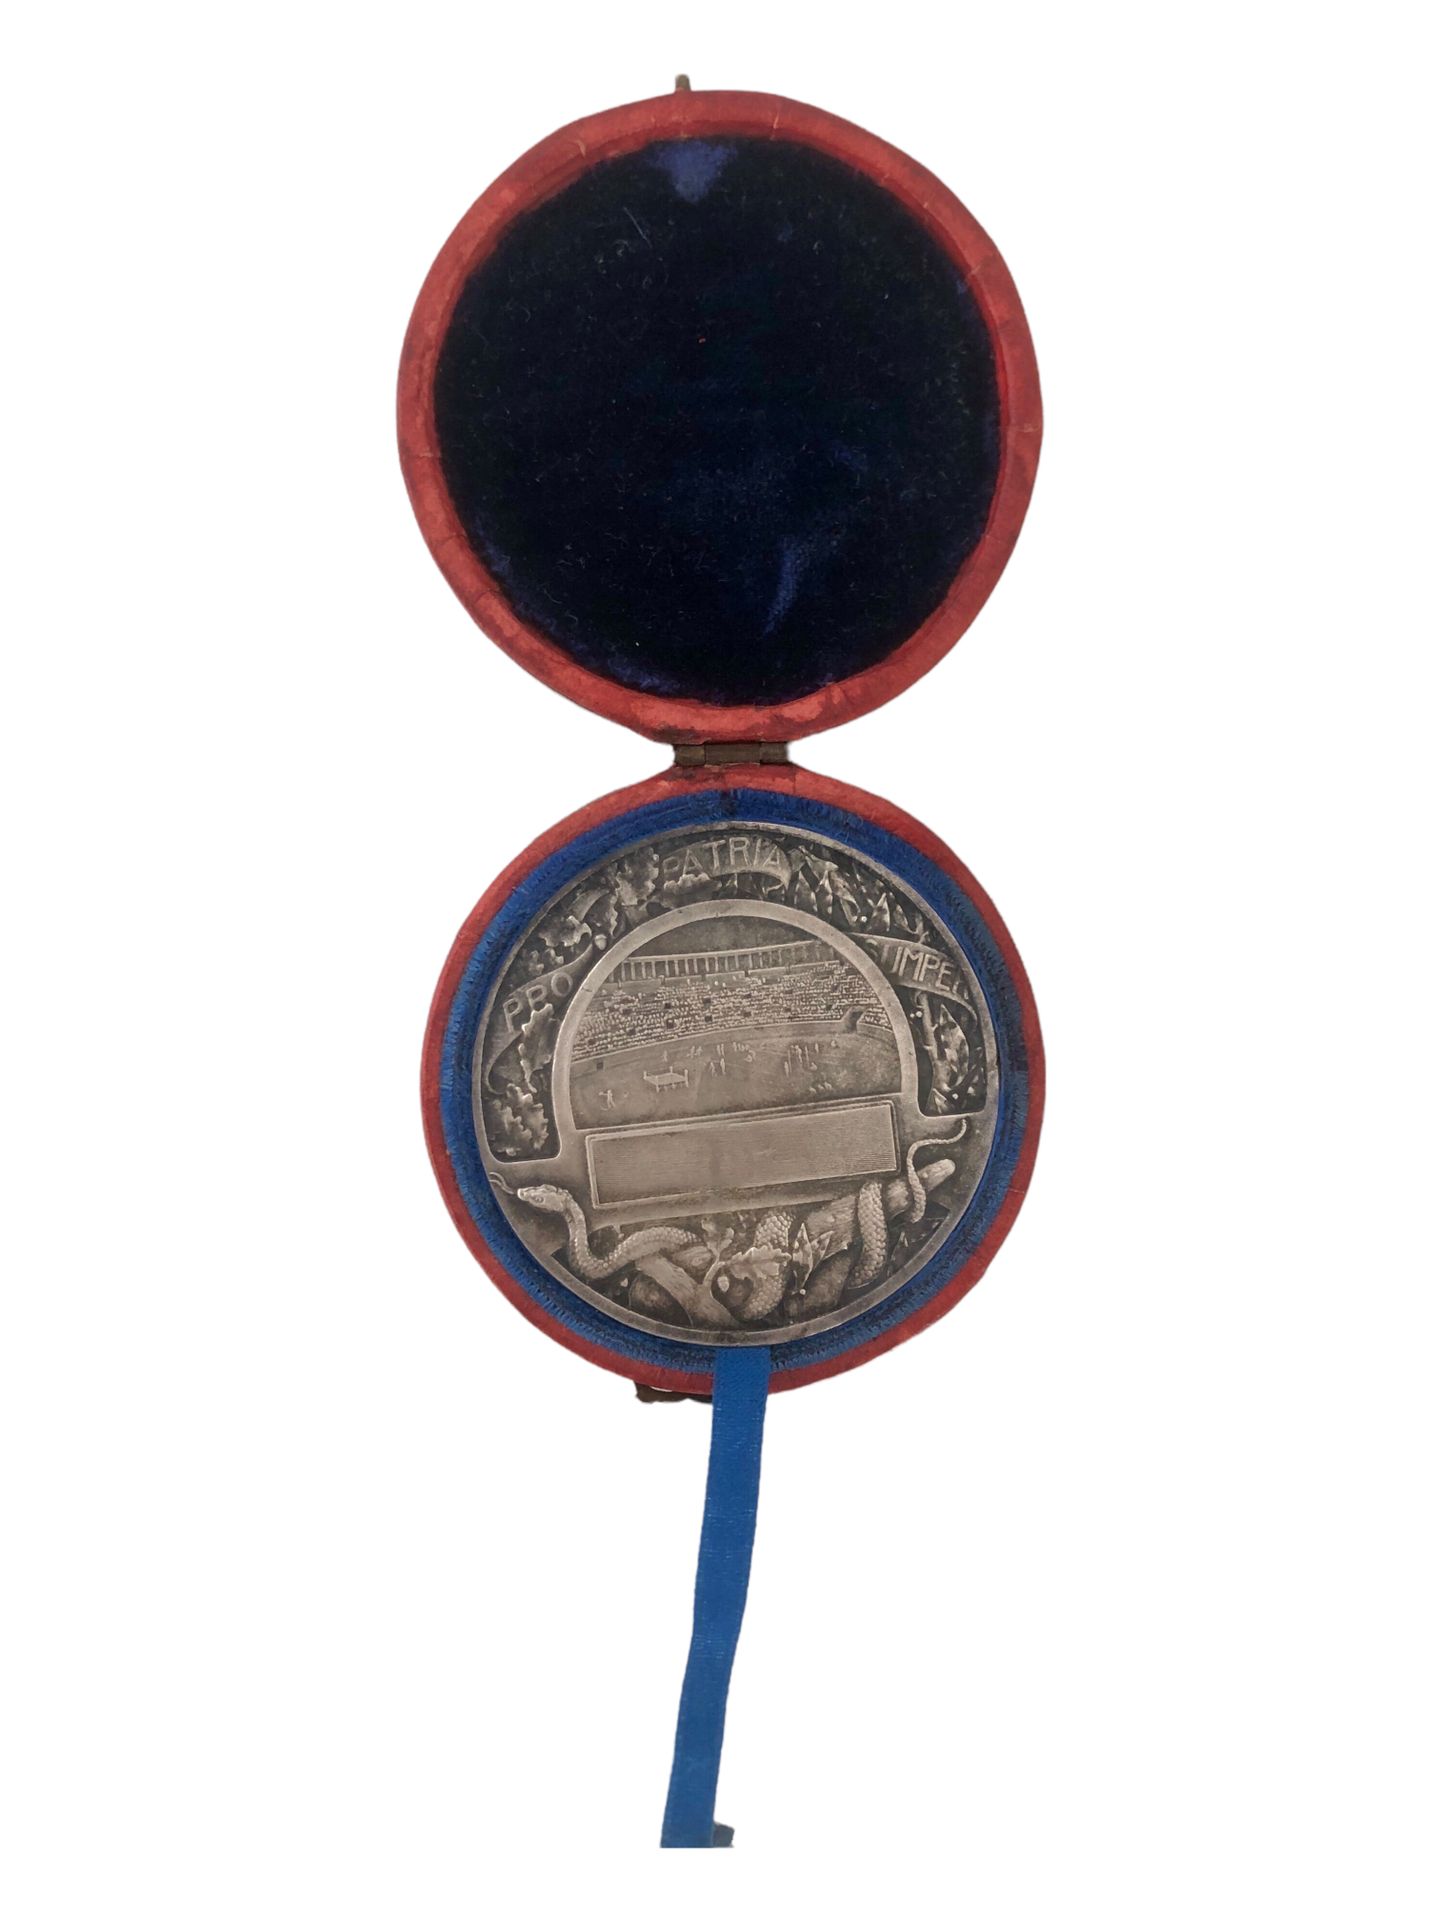 Null 运动奖章

铜质镀银 "pro patria sumper"。

在其案件中。

直径4.5厘米。